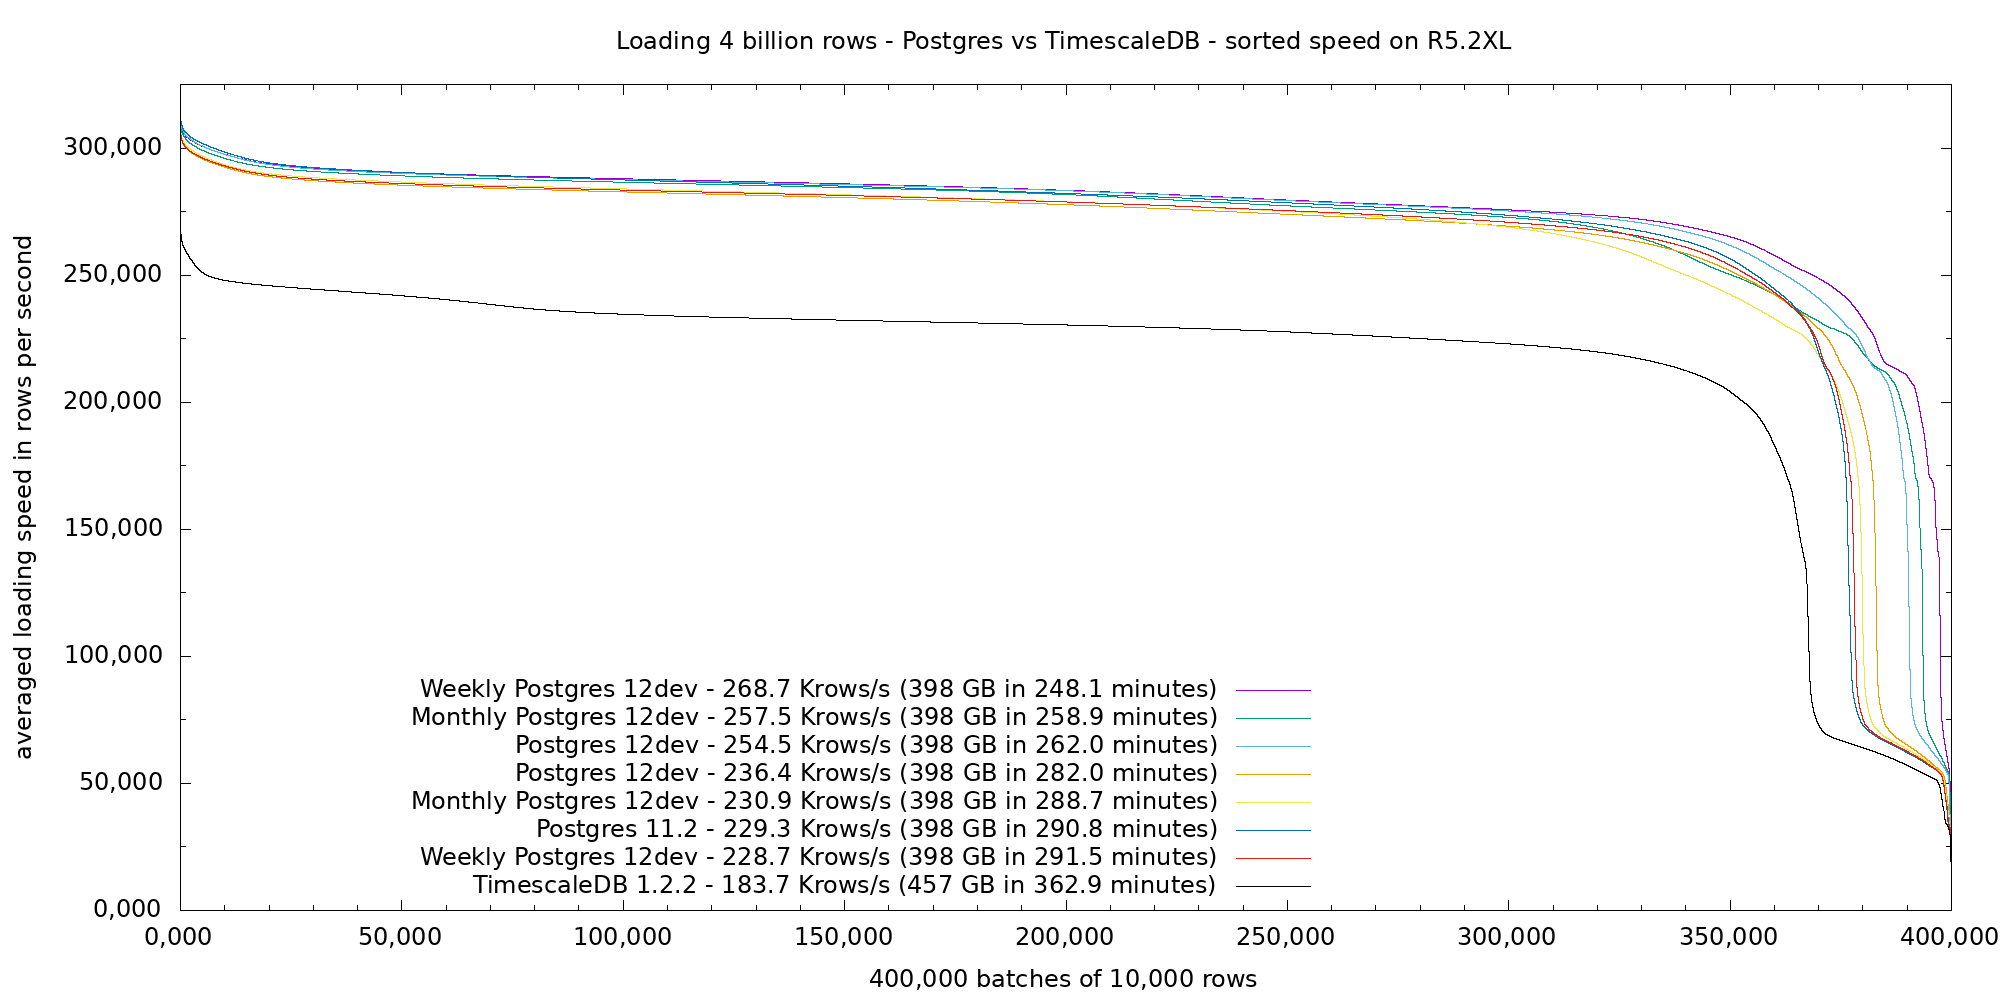 Postgres vs TimescaleDB sorted loading speed